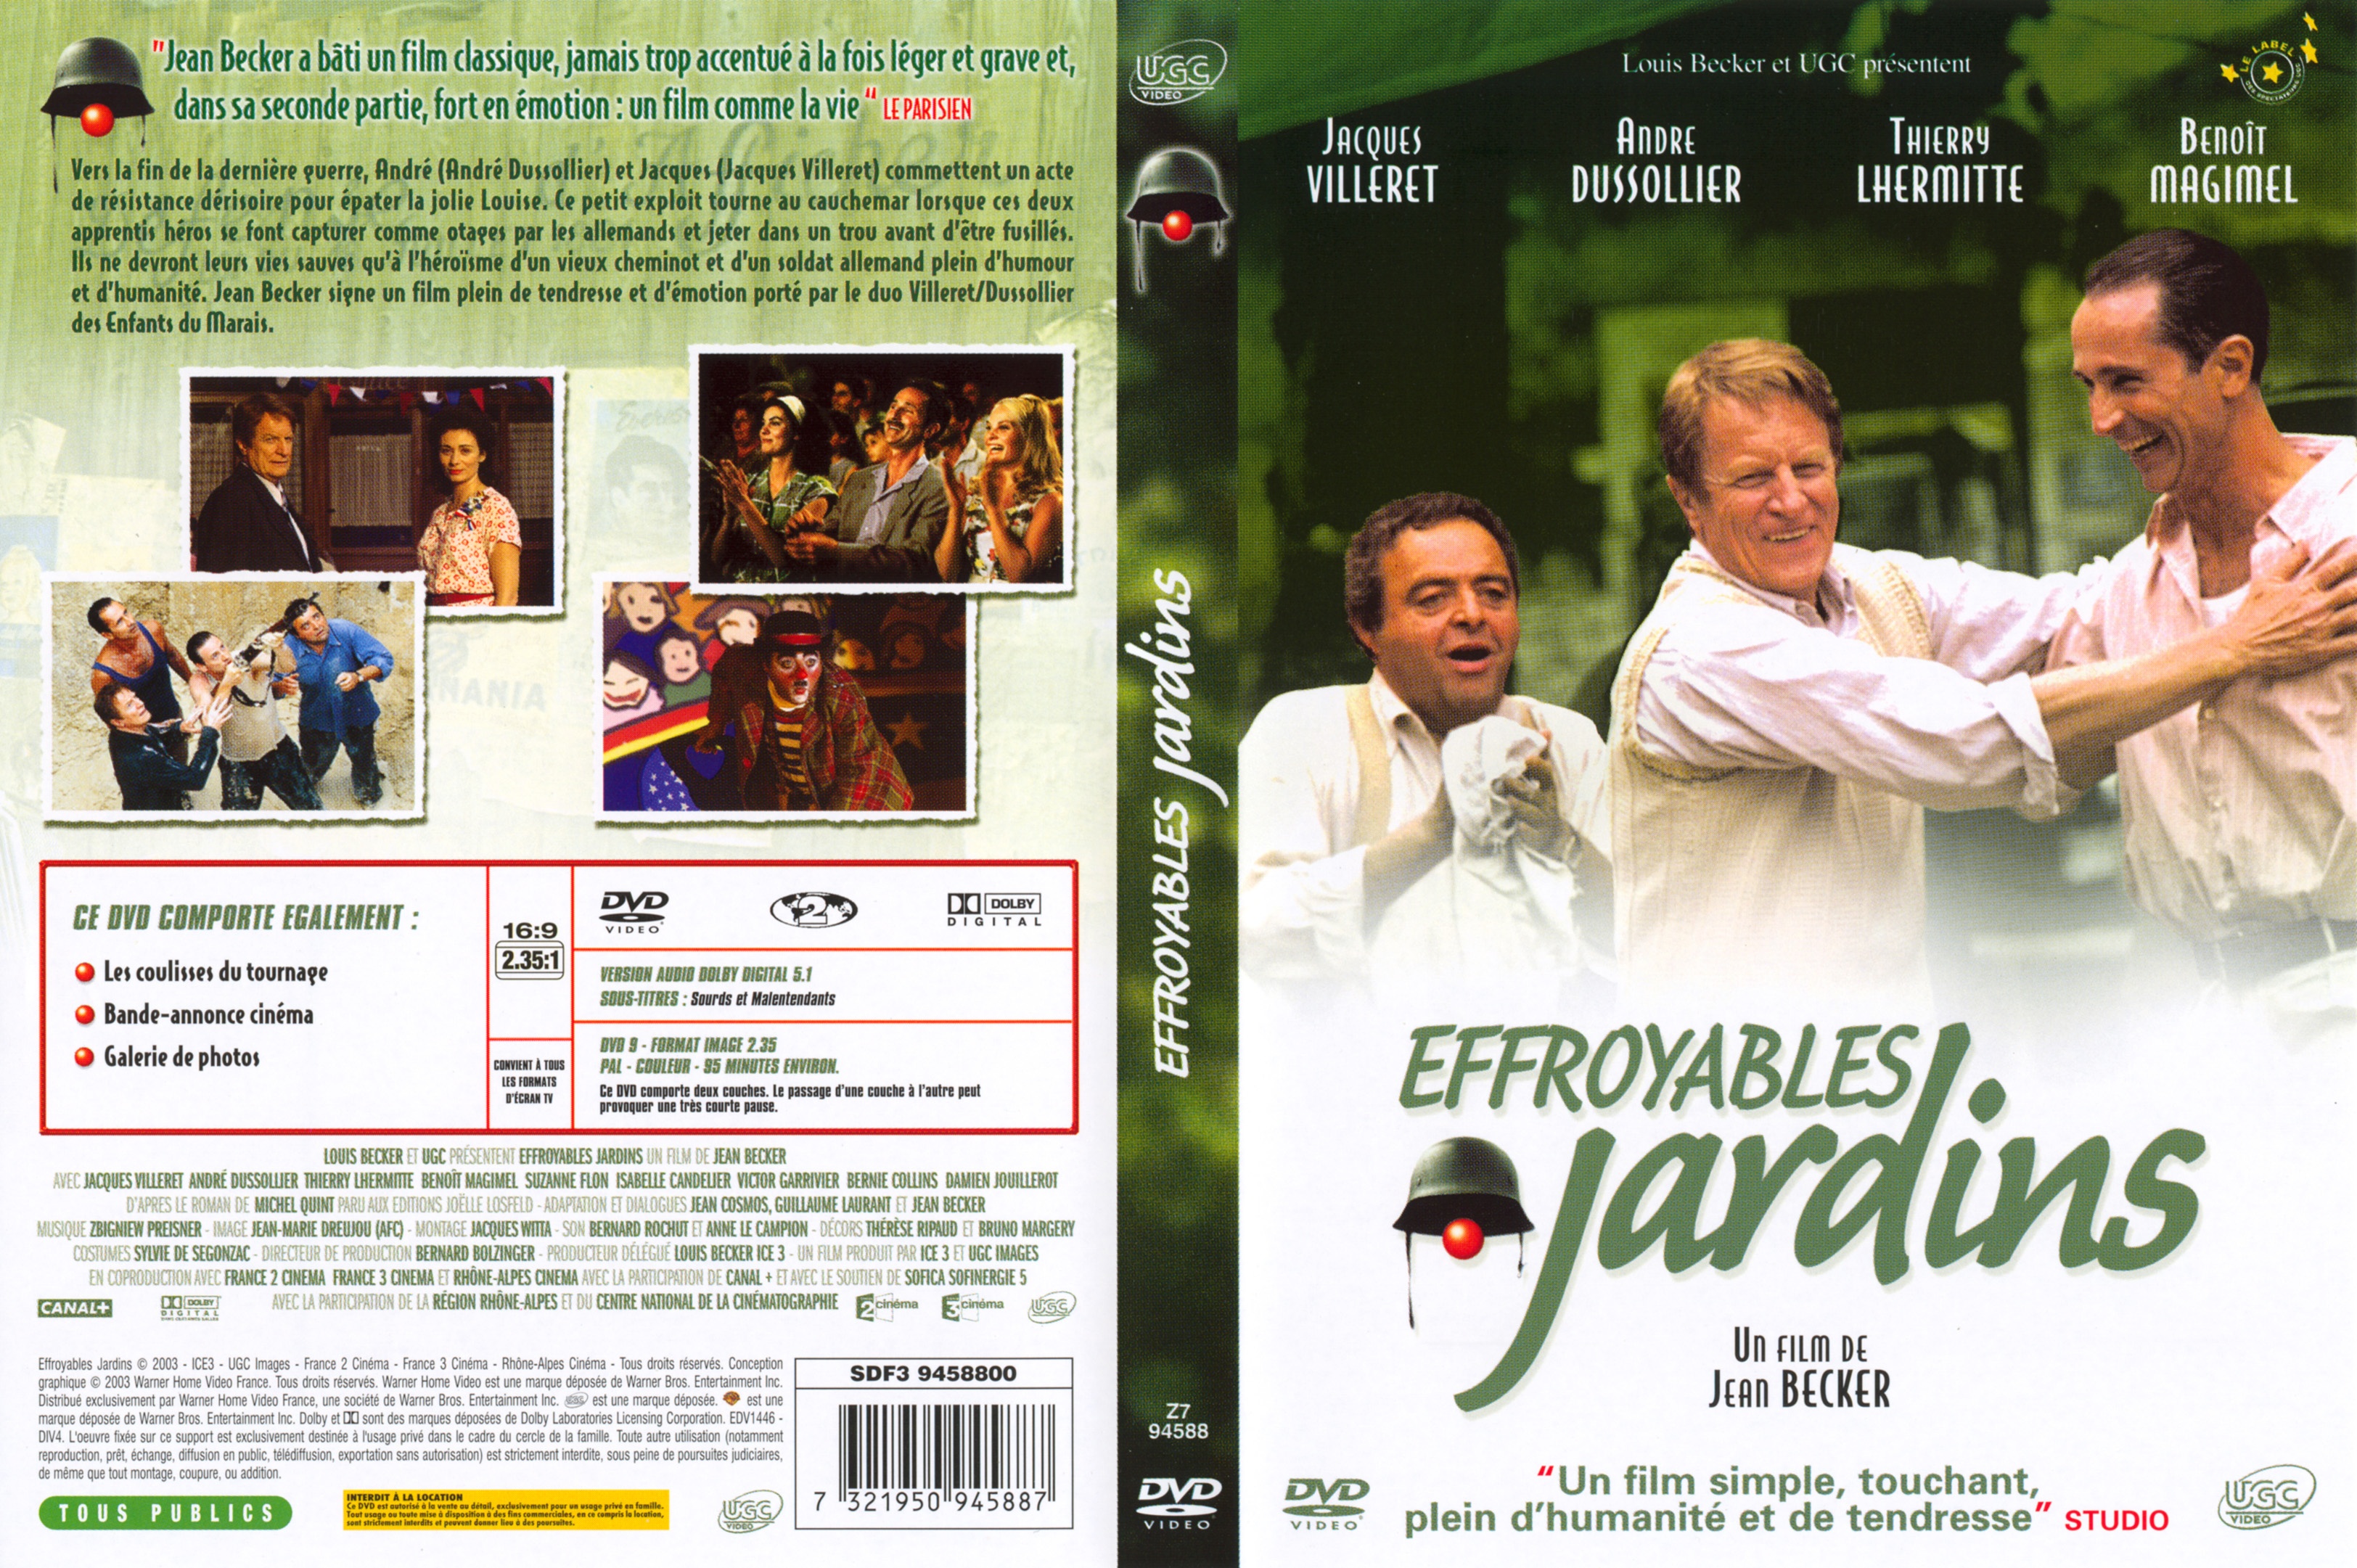 Jaquette DVD Effroyables jardins